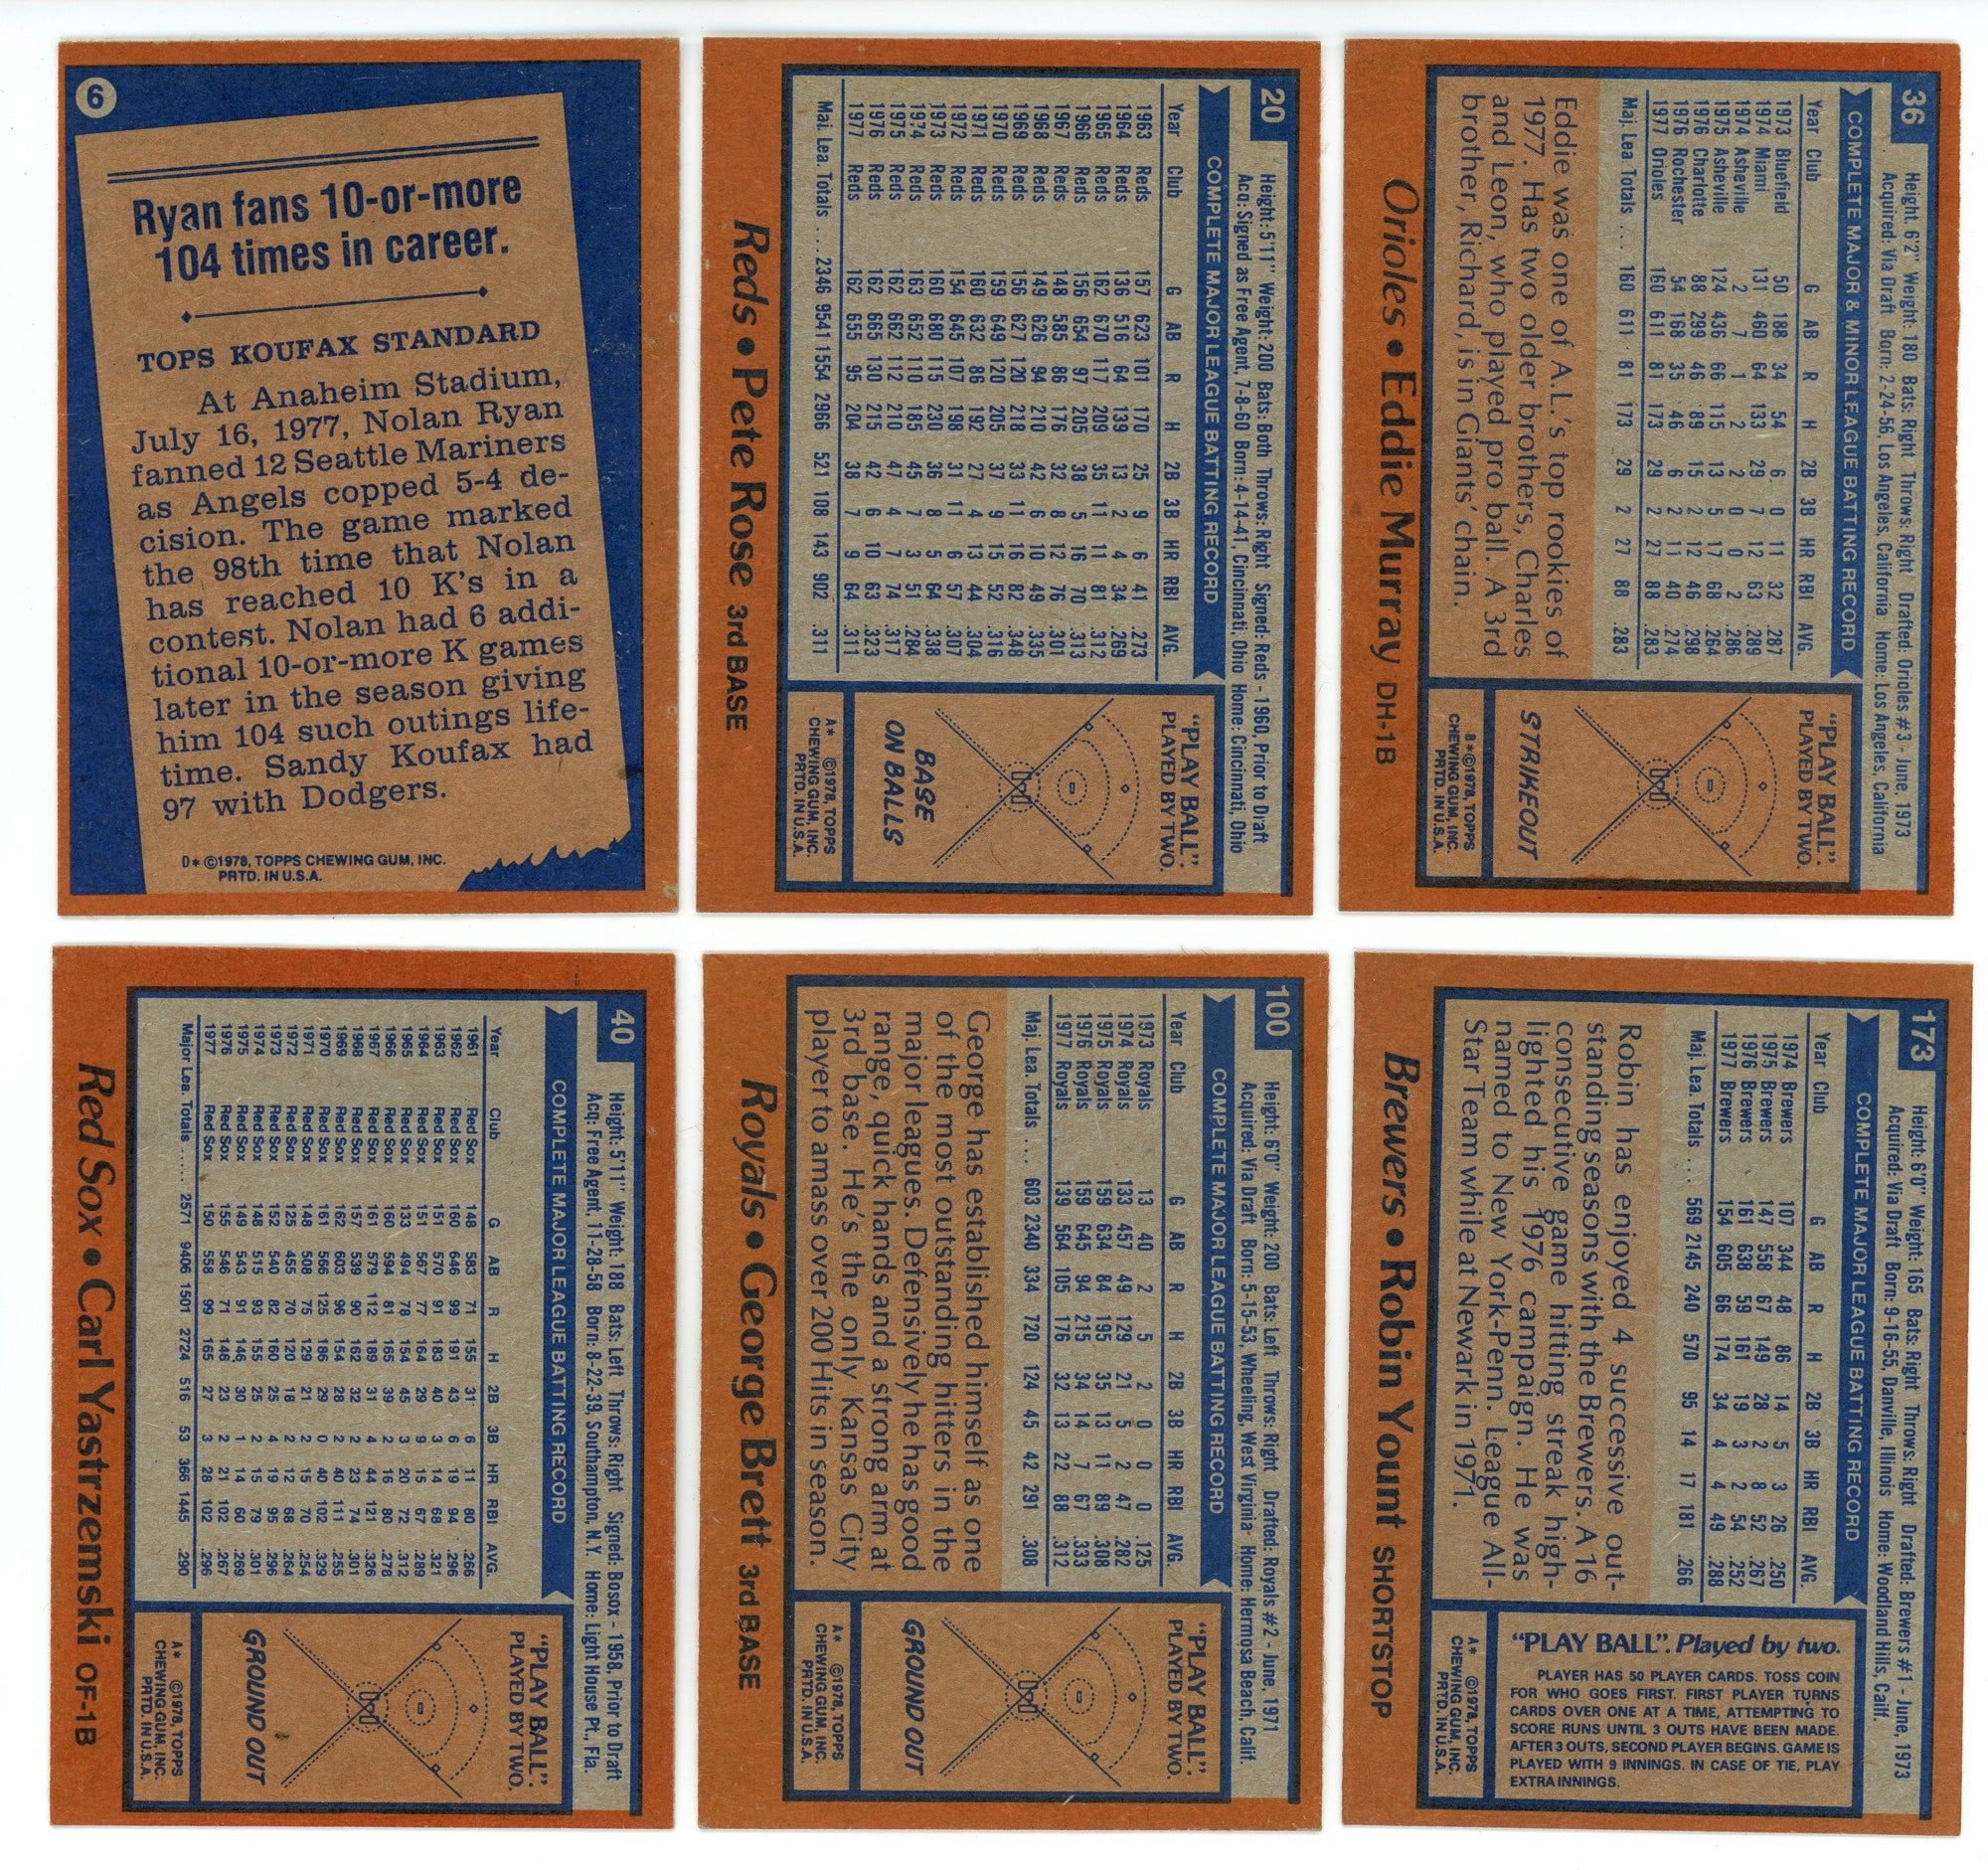 1978 TOPPS COMPLETE BASEBALL CARD SET (726) EDDIE MURRAY, PAUL MOLITOR,  JACK MORRIS ROOKIE YEAR HOF for Sale in Montebello, CA - OfferUp